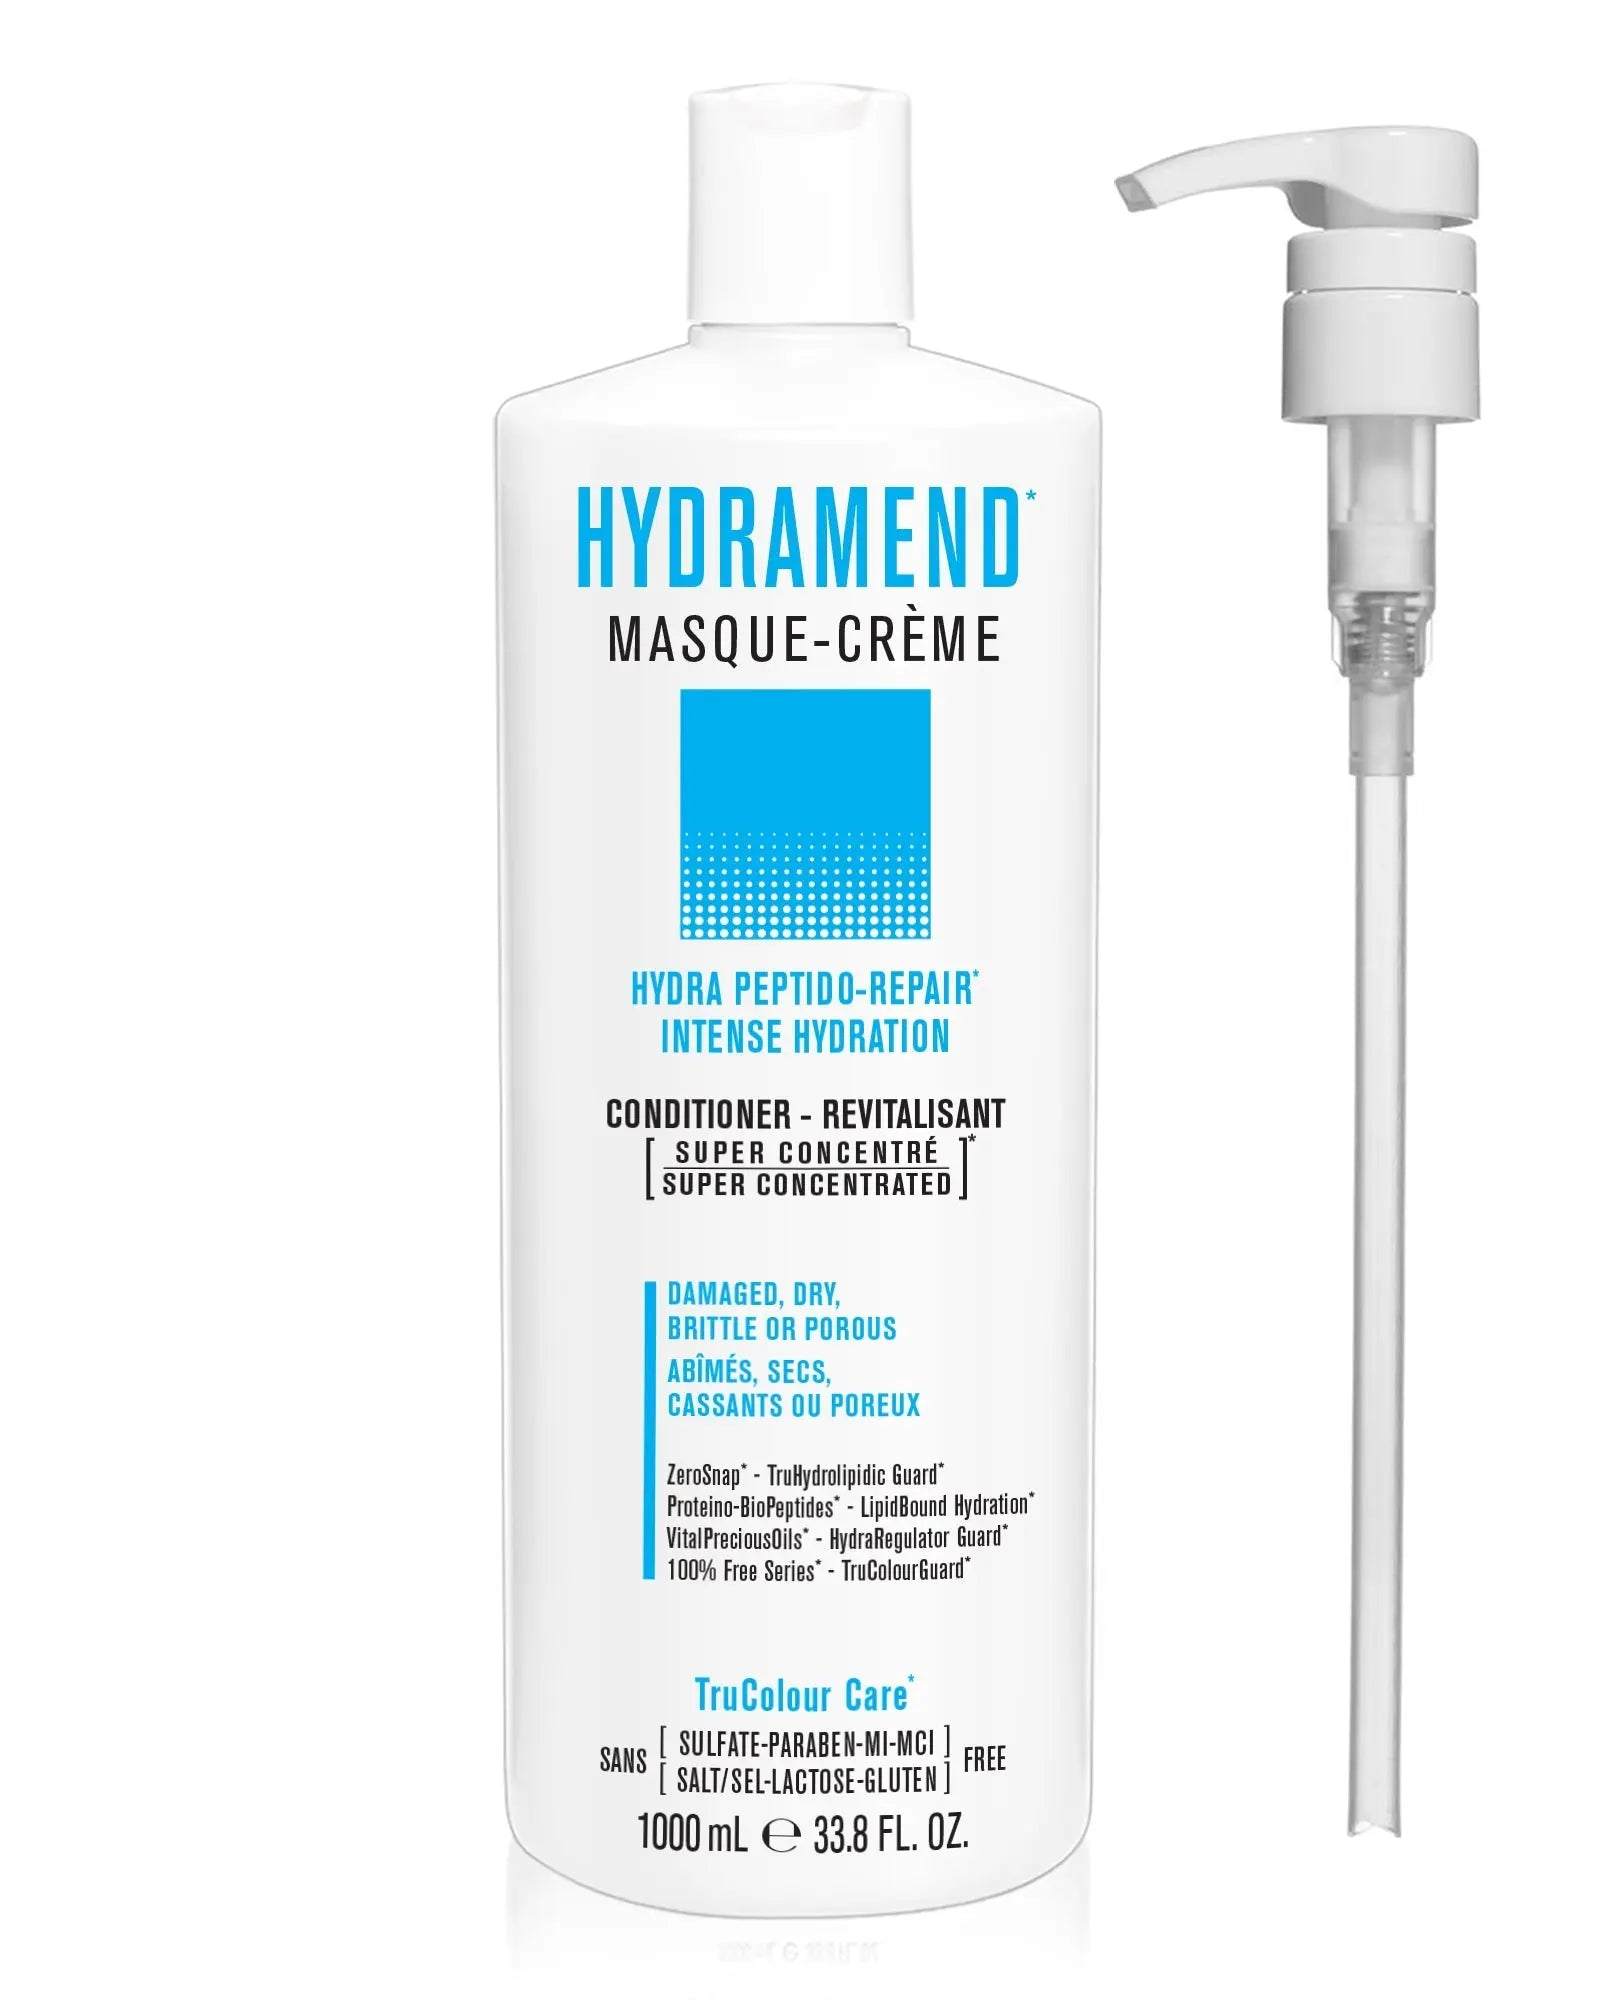 HYDRAMEND Masque-Creme Vegan Hydrating Conditioner & PumpHYDRAMEND Masque-Creme Vegan Hydrating Conditioner & PumpSNOBGIRLS.com